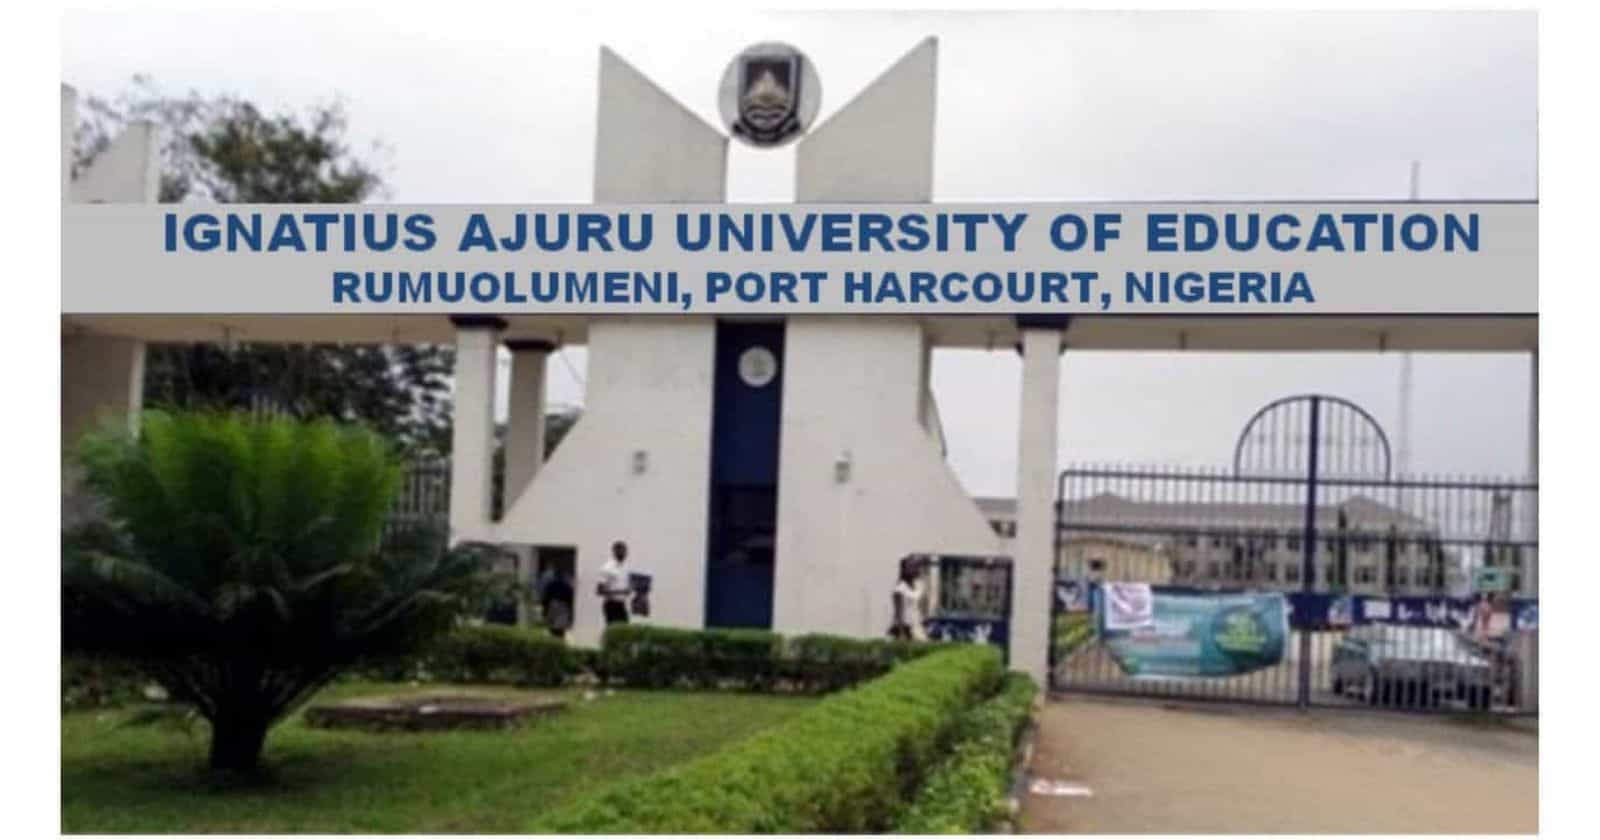 Ignatius Ajuru University of Education (IAUE) Registration Deadline